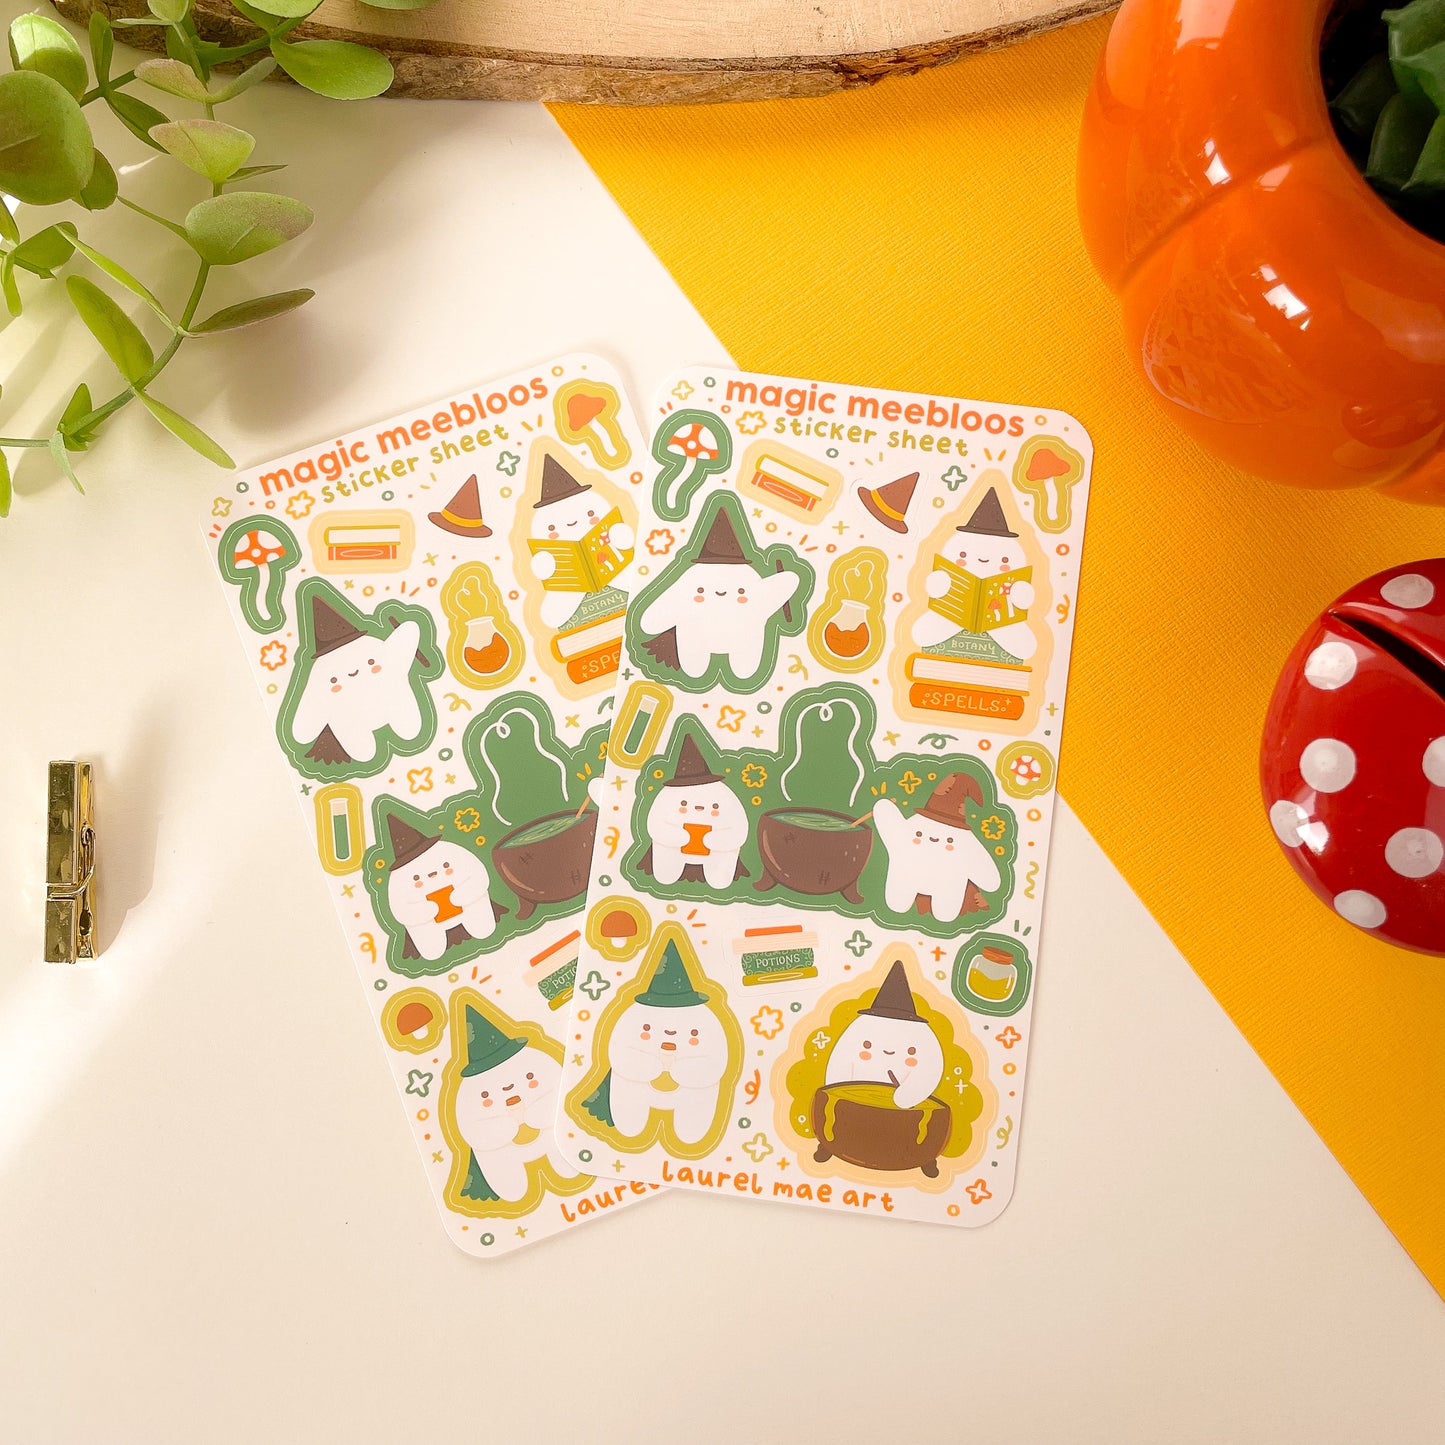 Magic Meebloos - Mini Sticker Sheet